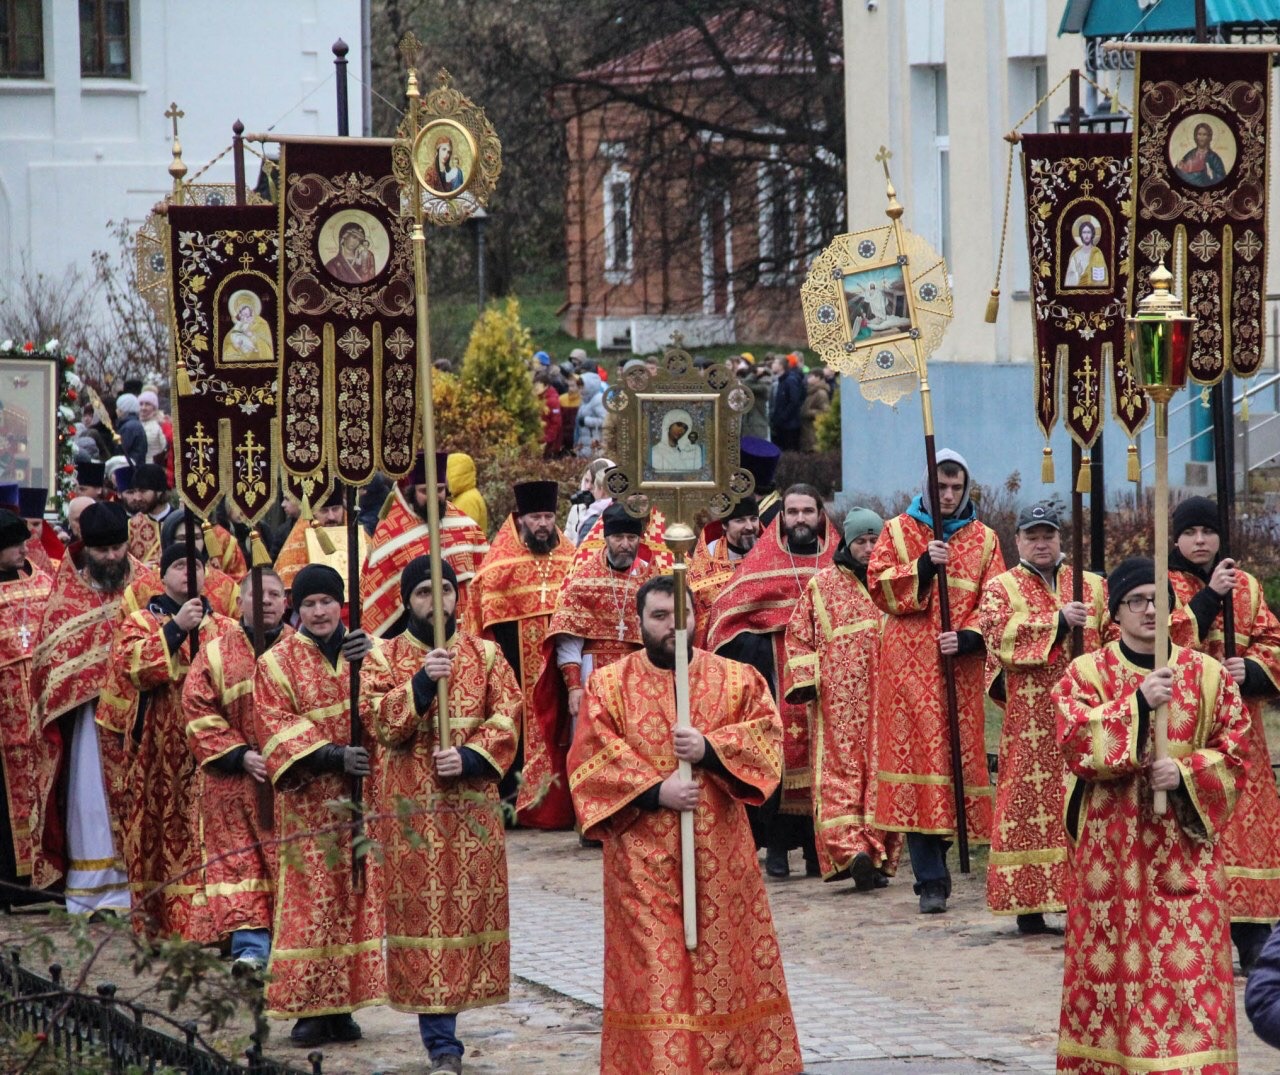 Православных 8 апреля